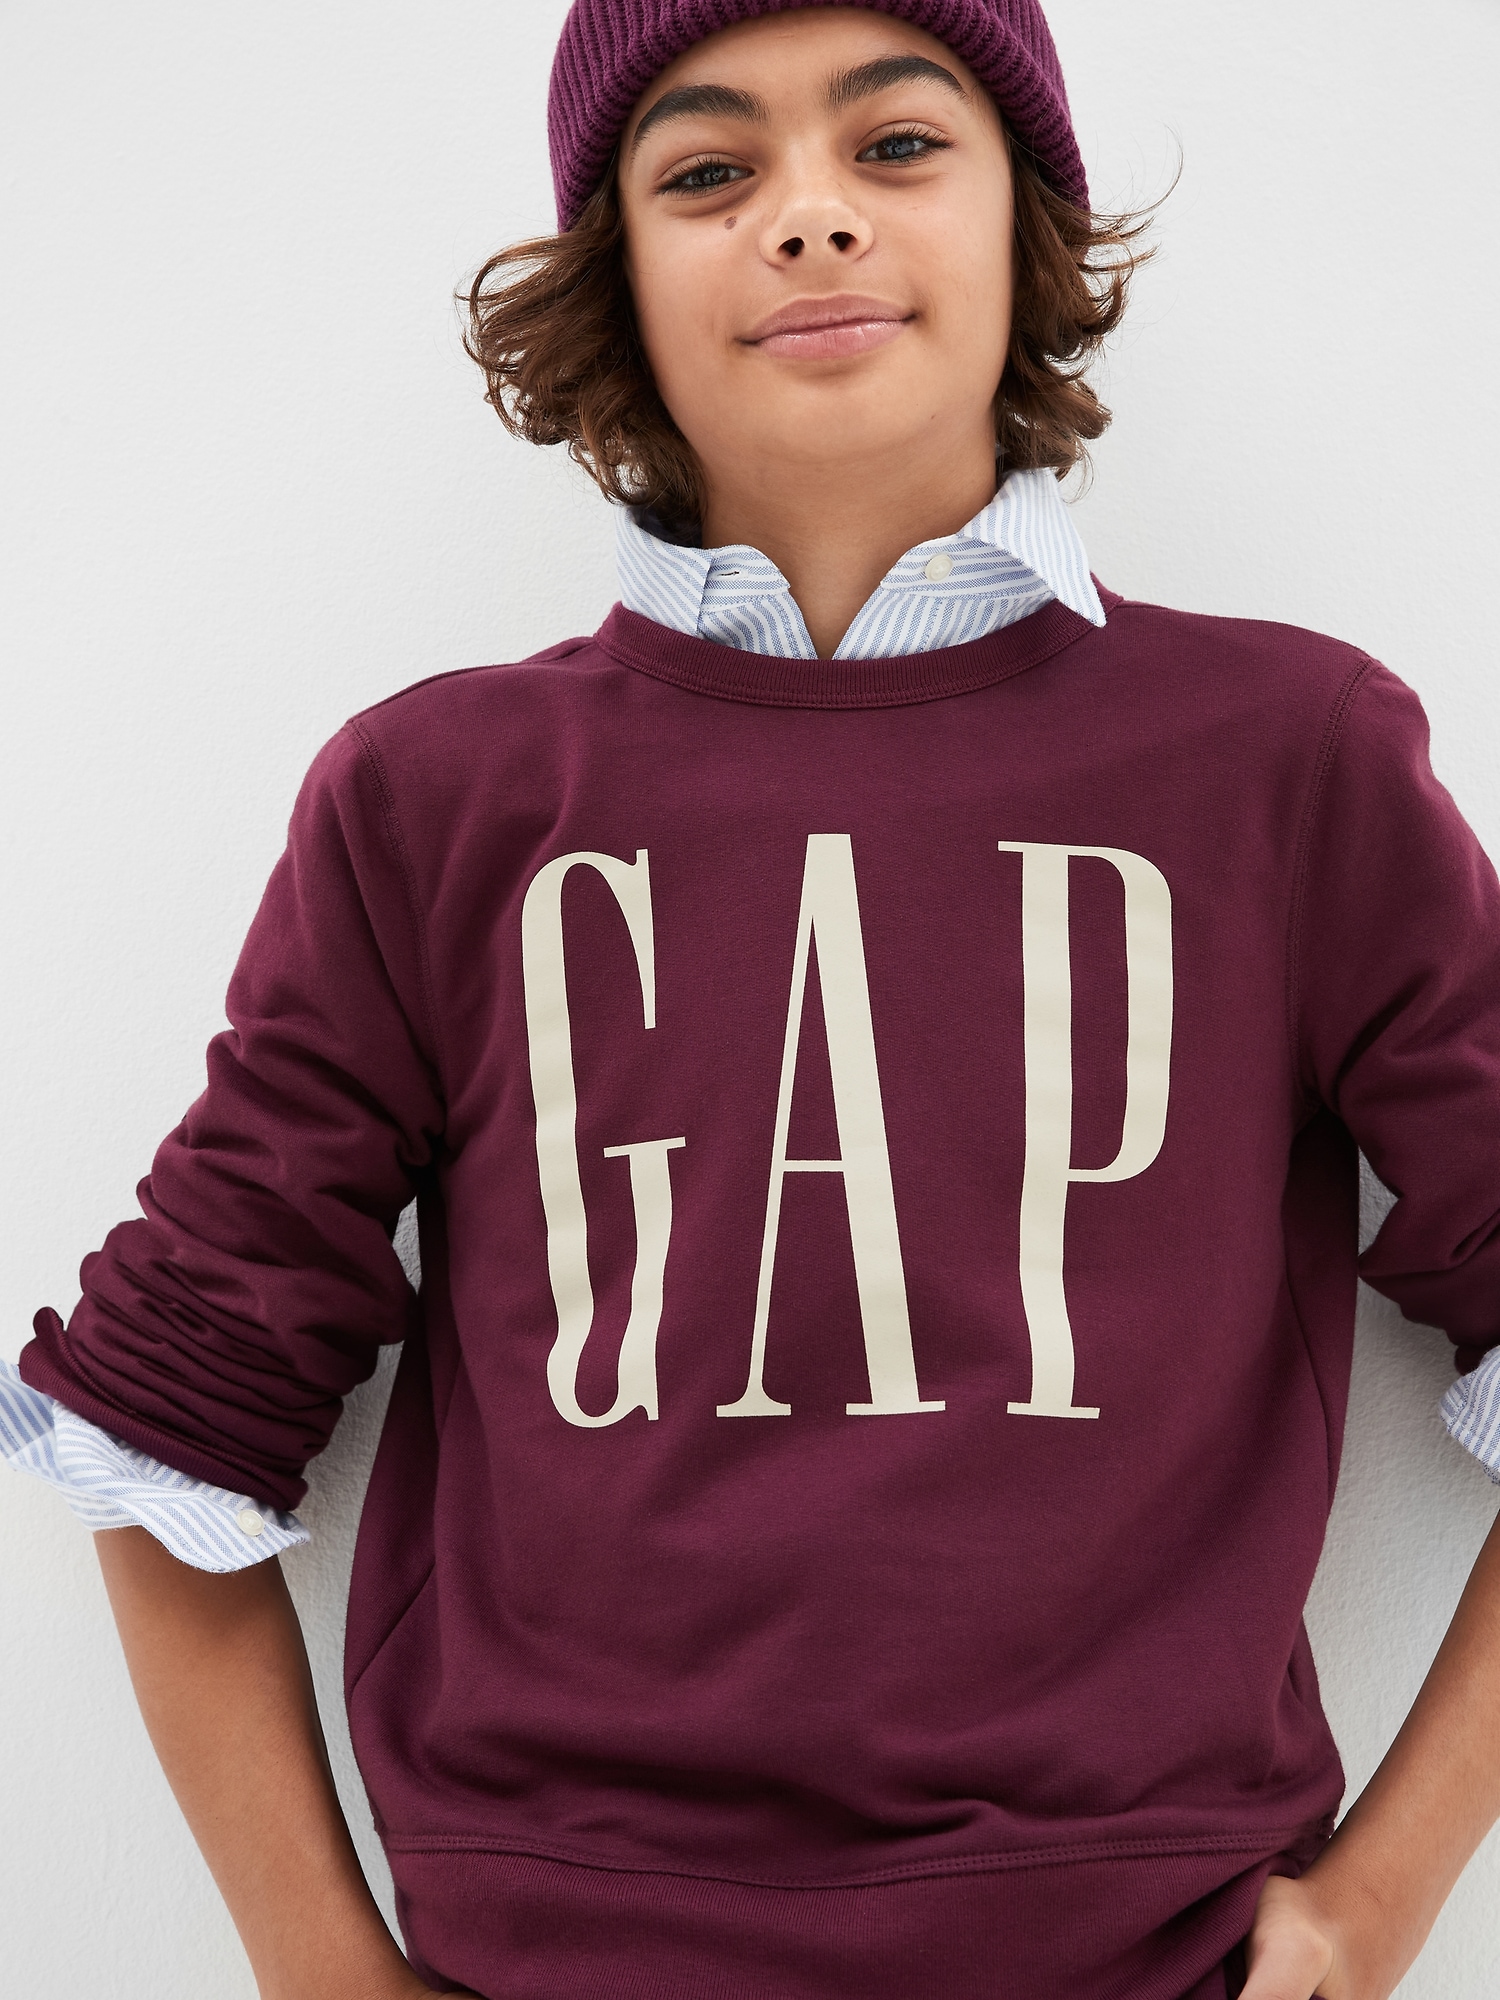 Kids Gap Logo Sweatshirt | Gap Factory